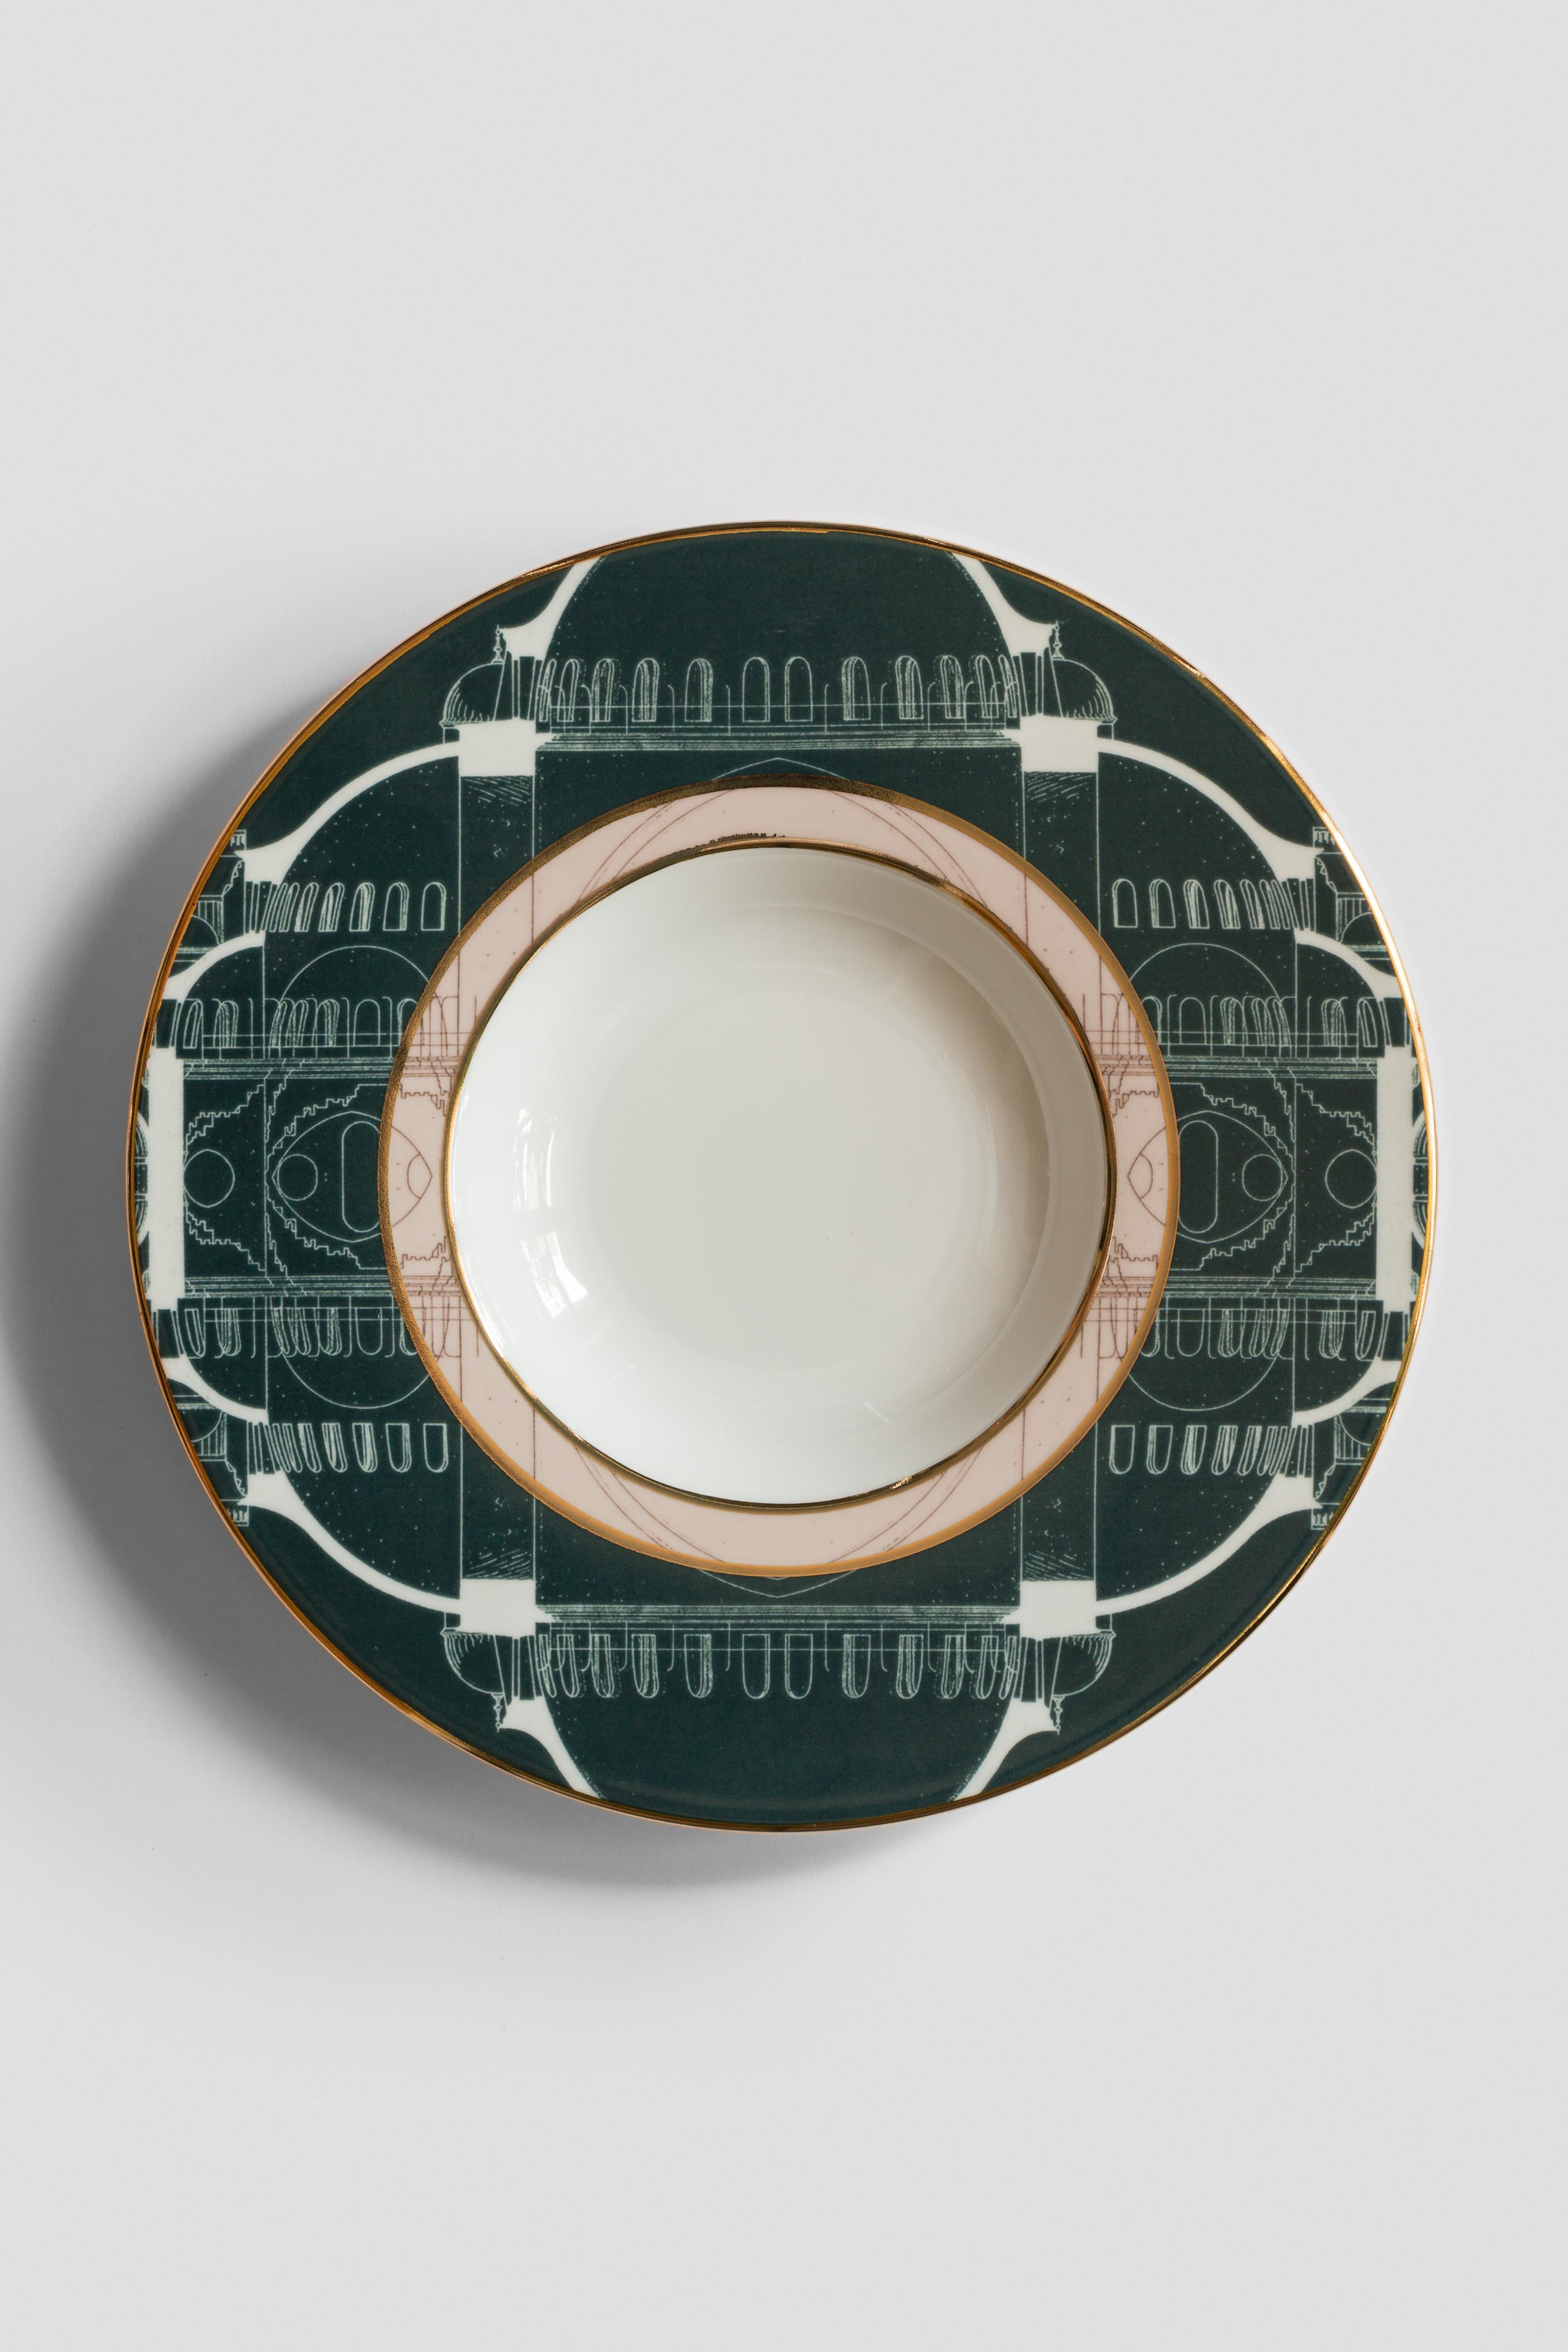 Lebanon, Six Contemporary Porcelain Soup Plates with Decorative Design For Sale 2